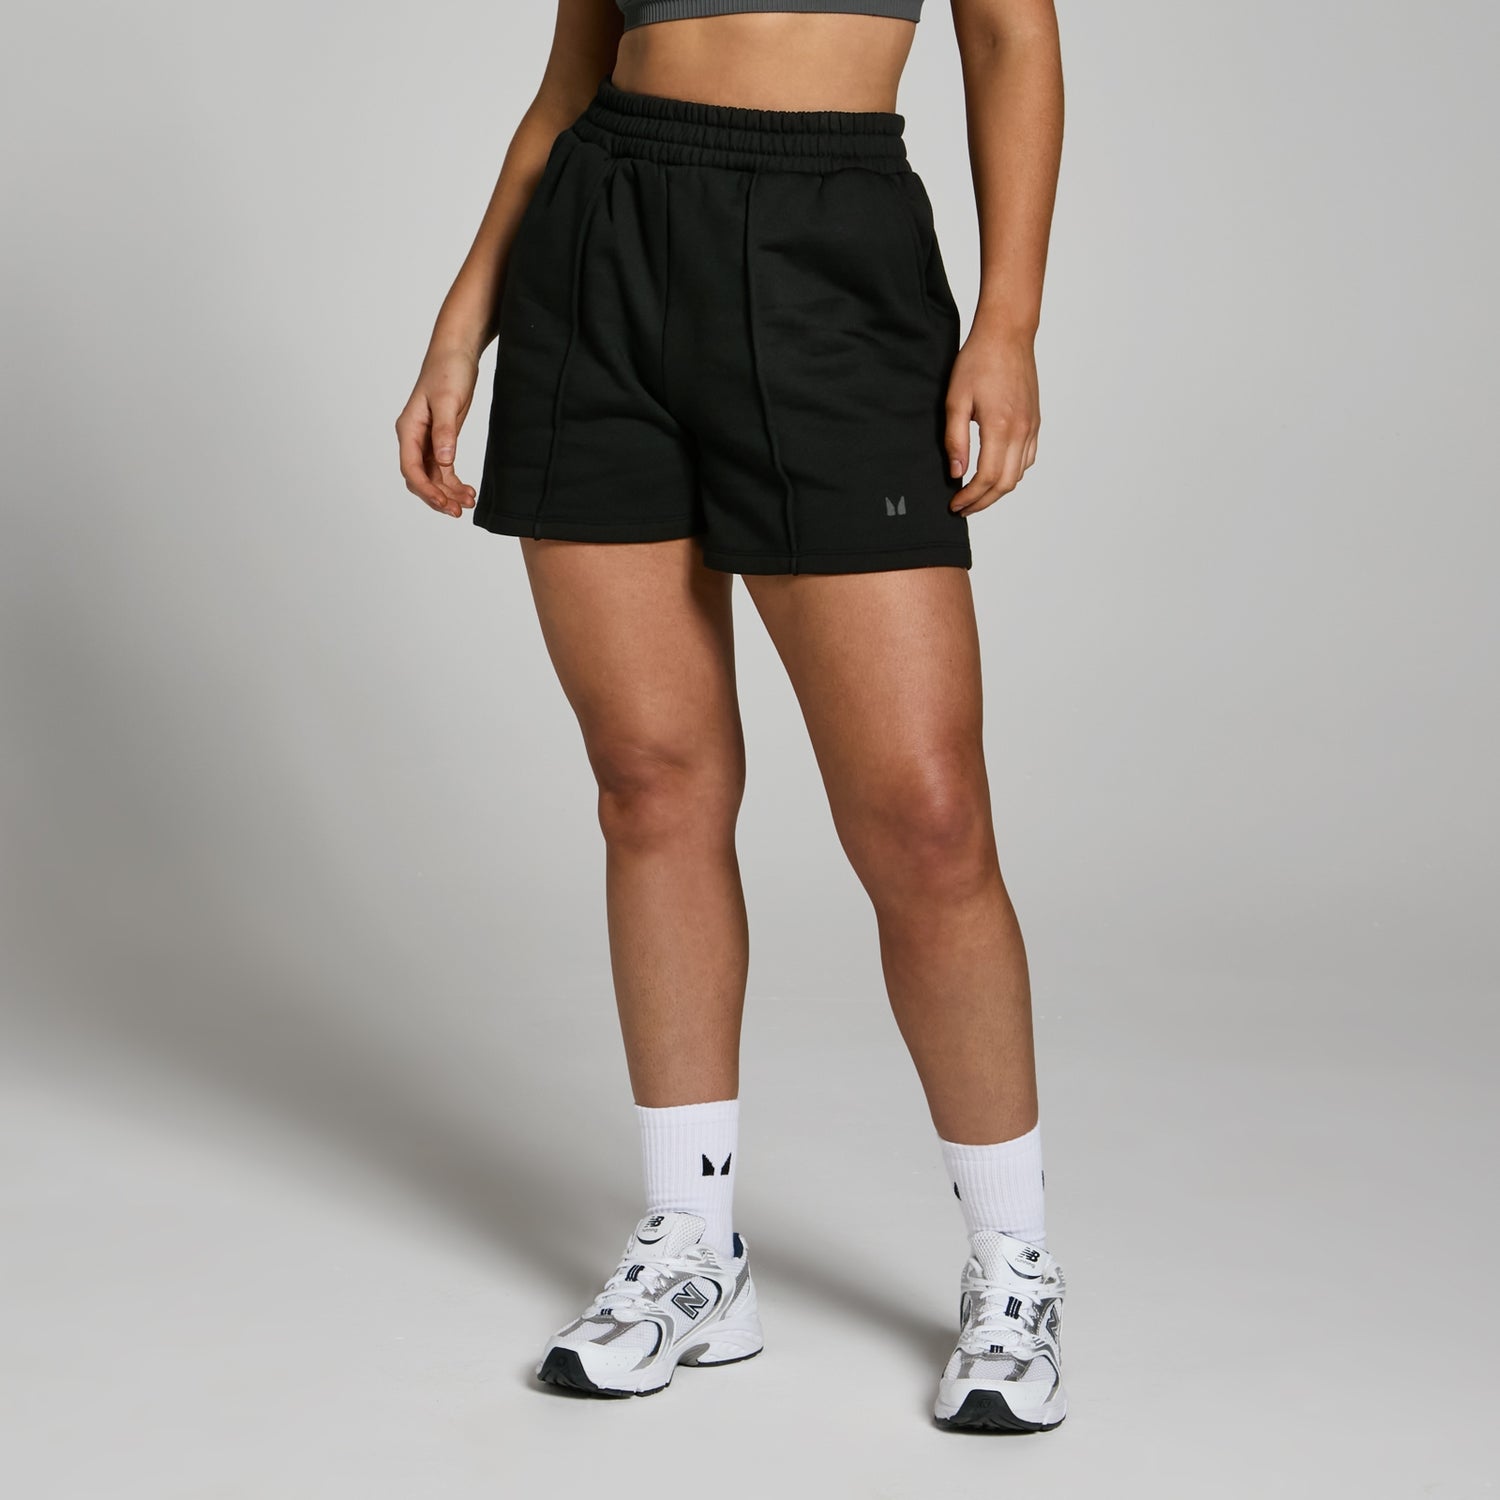 Lifestyle生活方式系列女士短款运动短裤 - 黑色  - XS